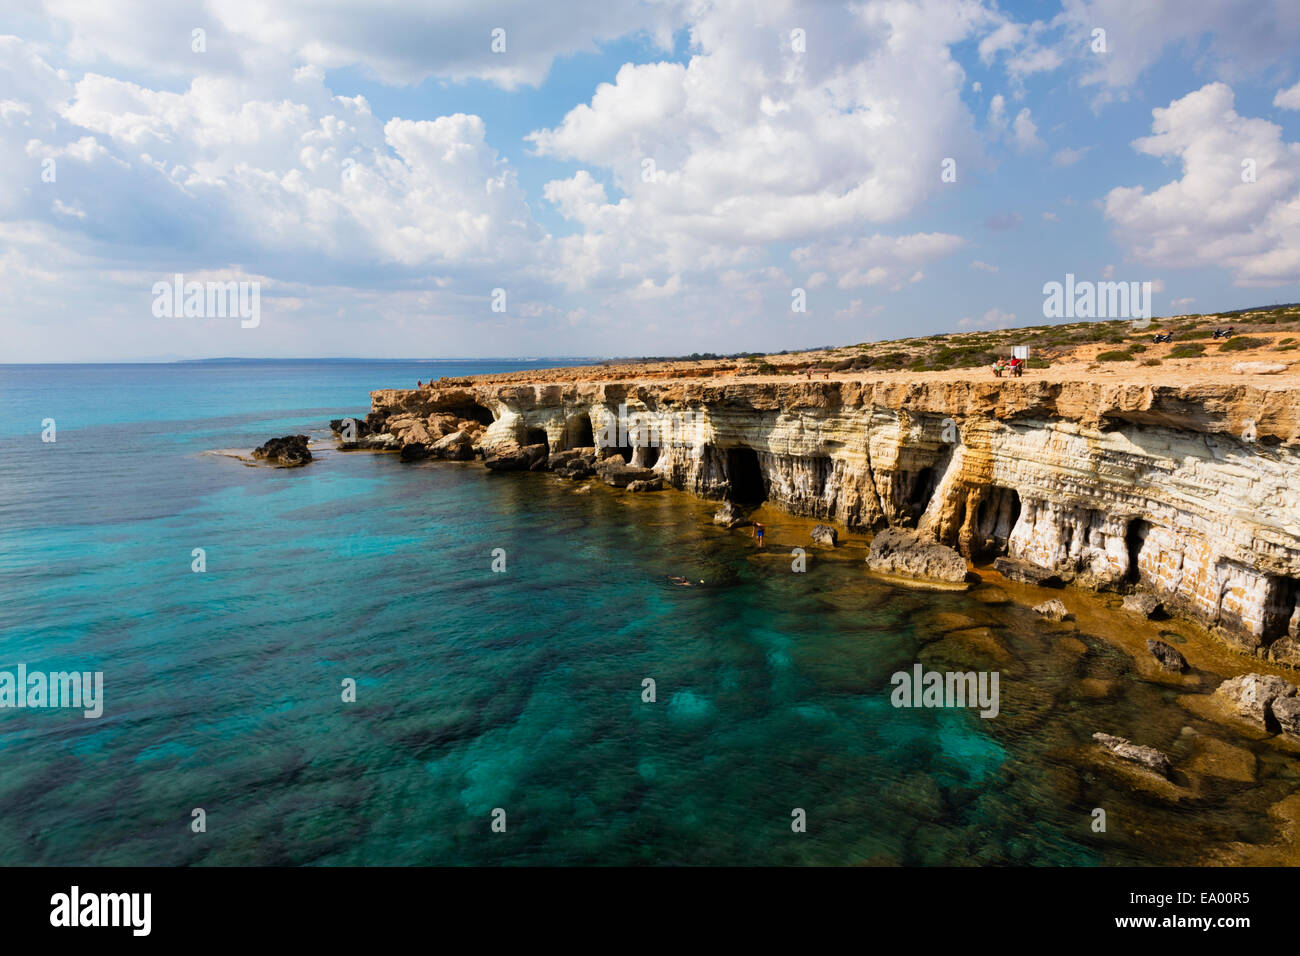 Meeresgrotten und türkisblaues Wasser am Kap Greco. Zypern Stockfoto